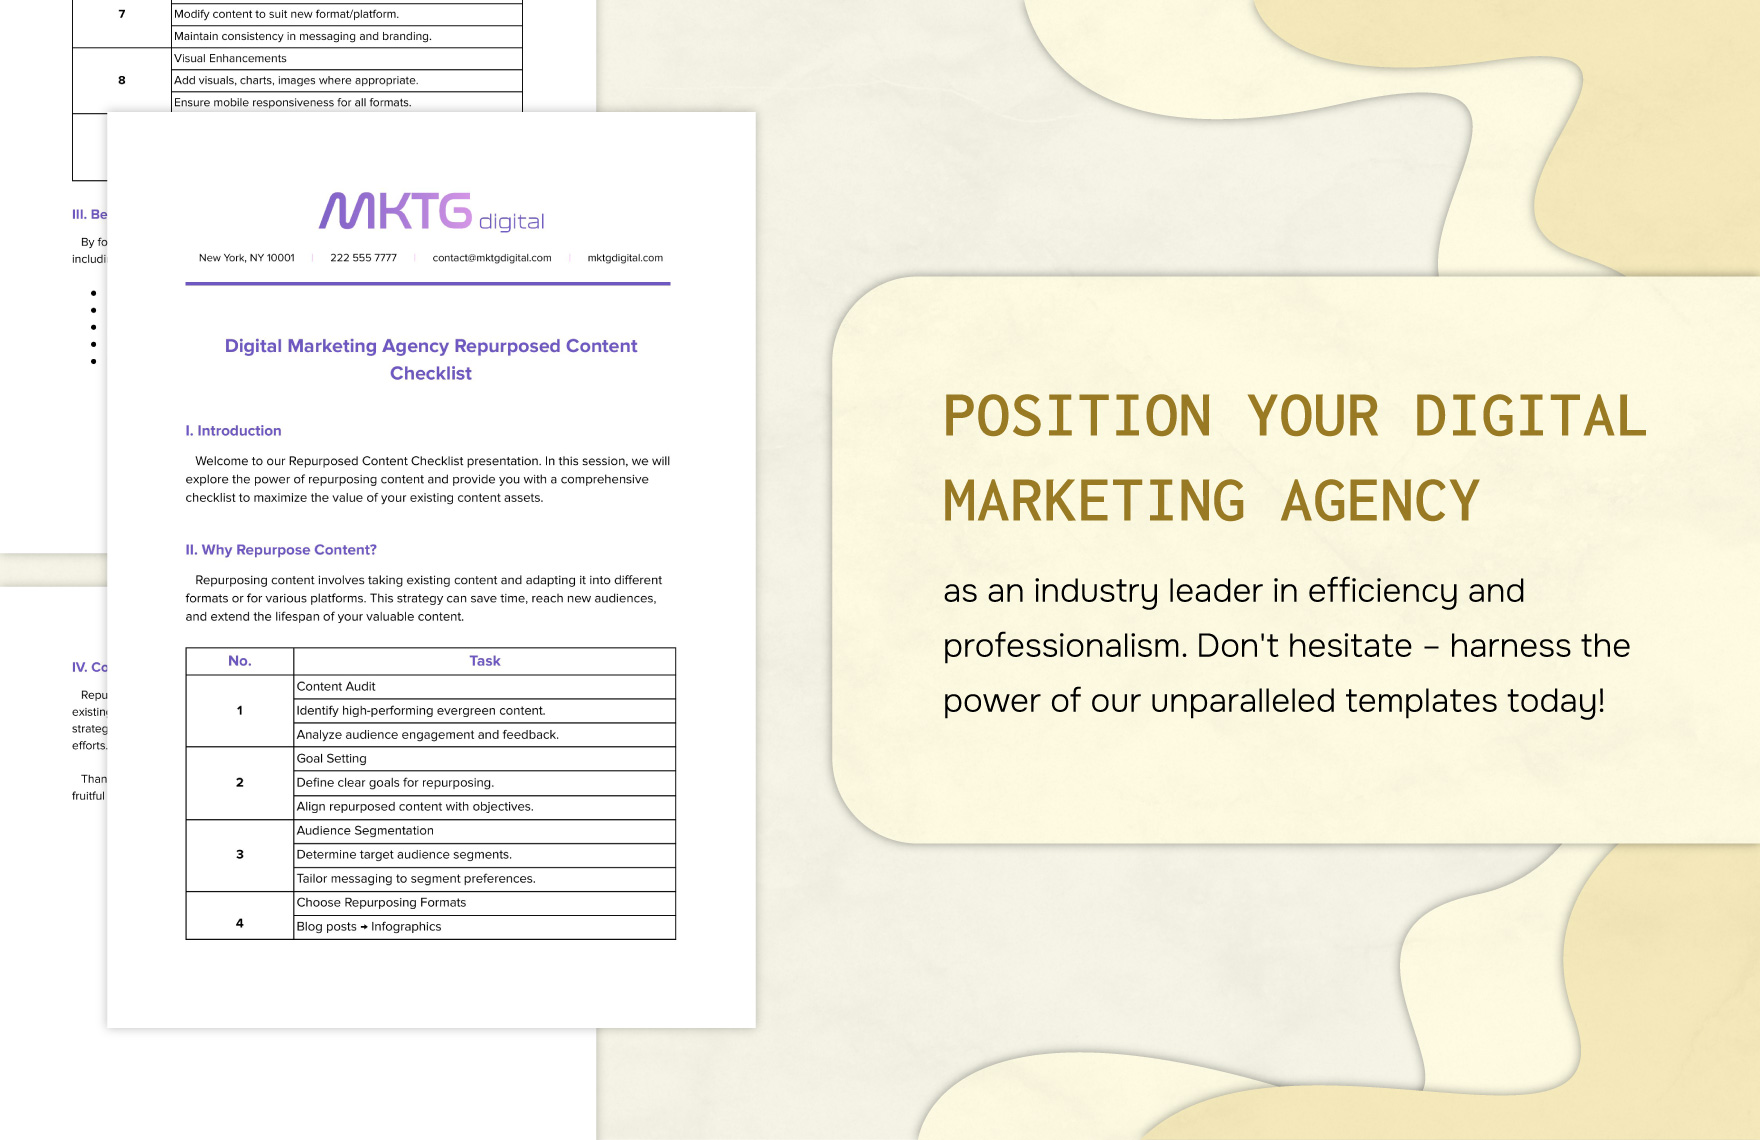 Digital Marketing Agency Repurposed Content Checklist Template